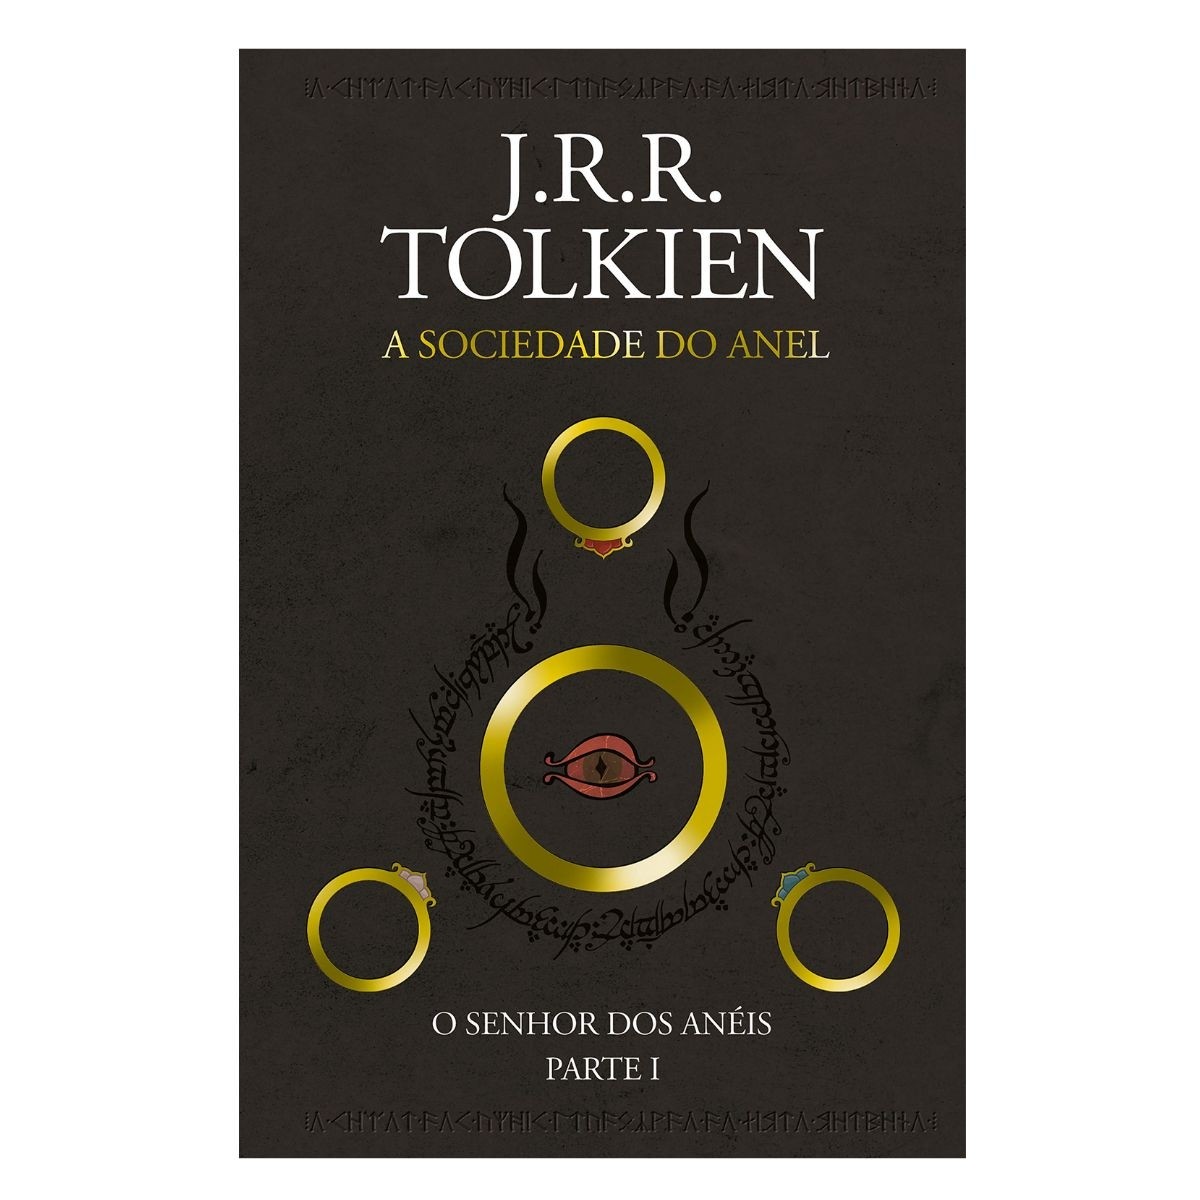 O Senhor dos Anéis: A Sociedade do Anel - Parte I - J.R.R. Tolkien - Capa dura - HarperCollins